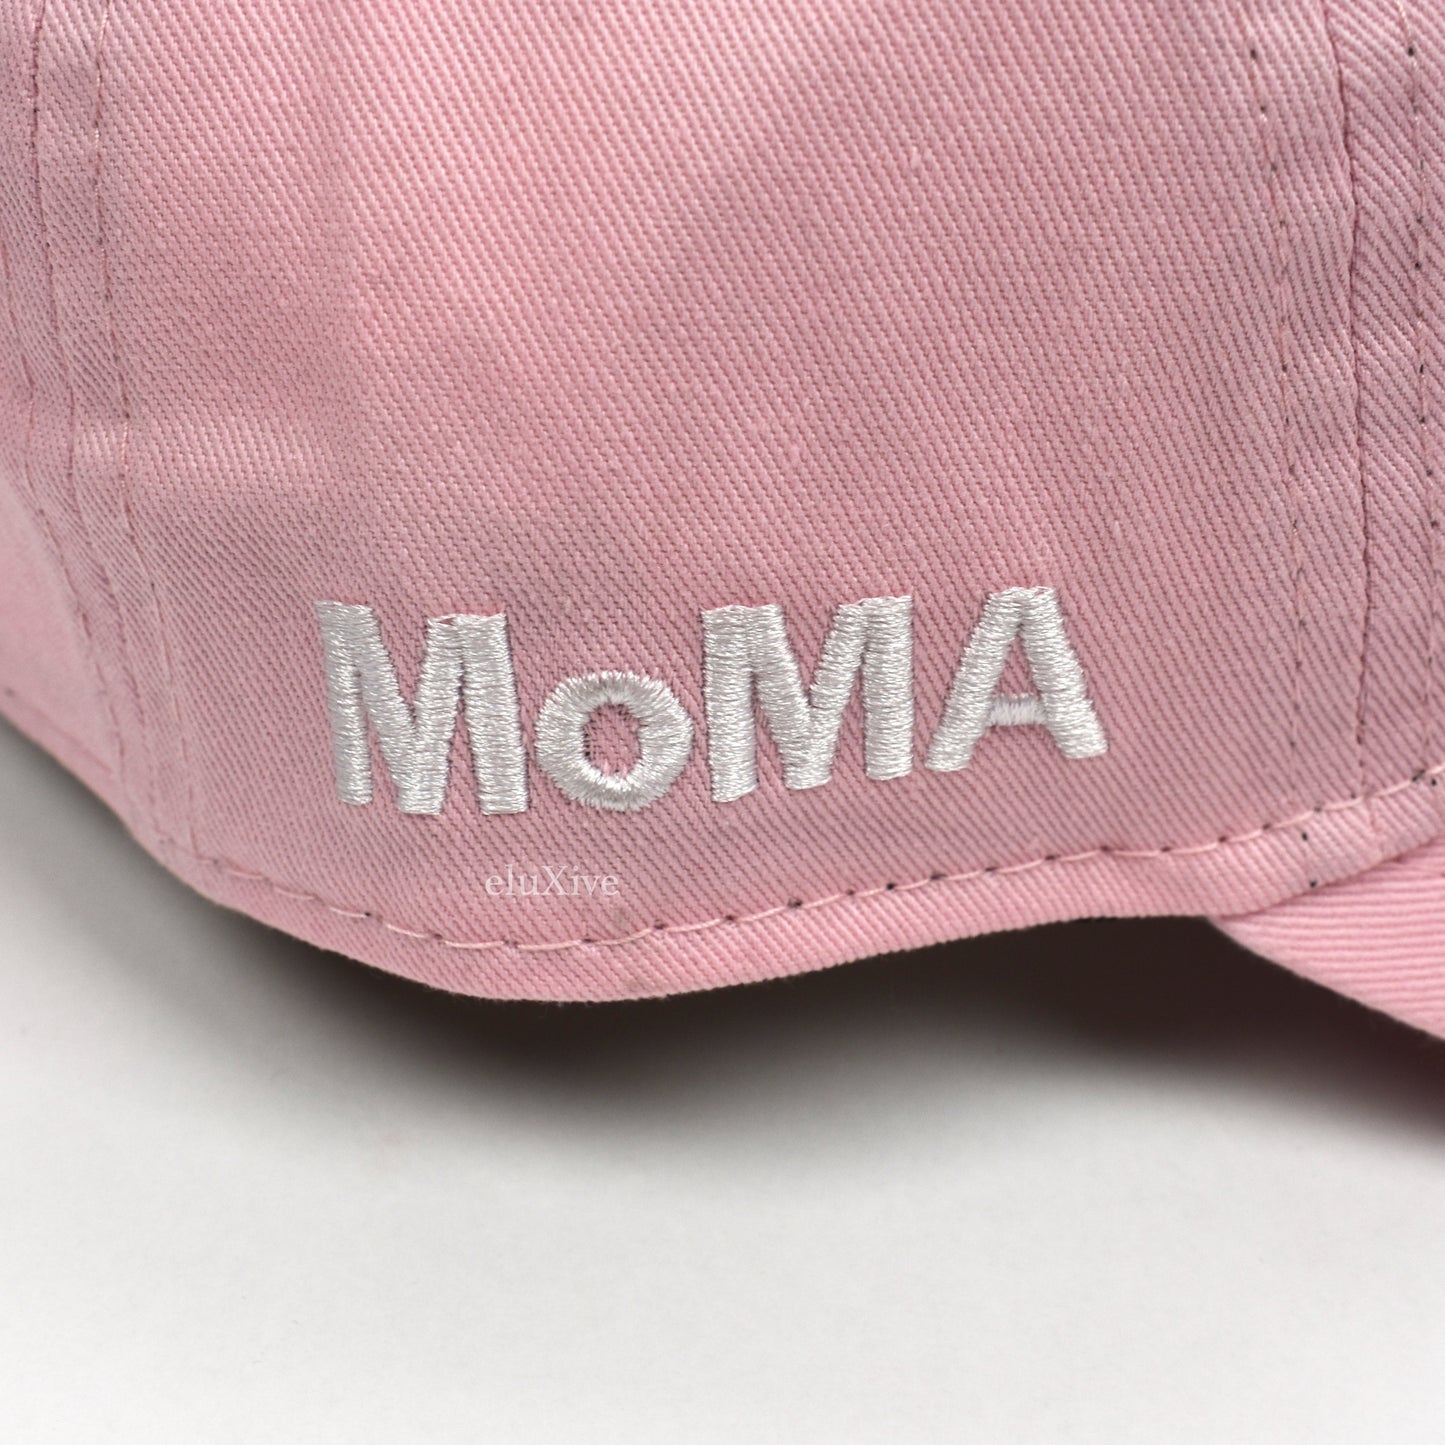 New Era - MoMA Edition Yankees Adjustable Hat (Pink)